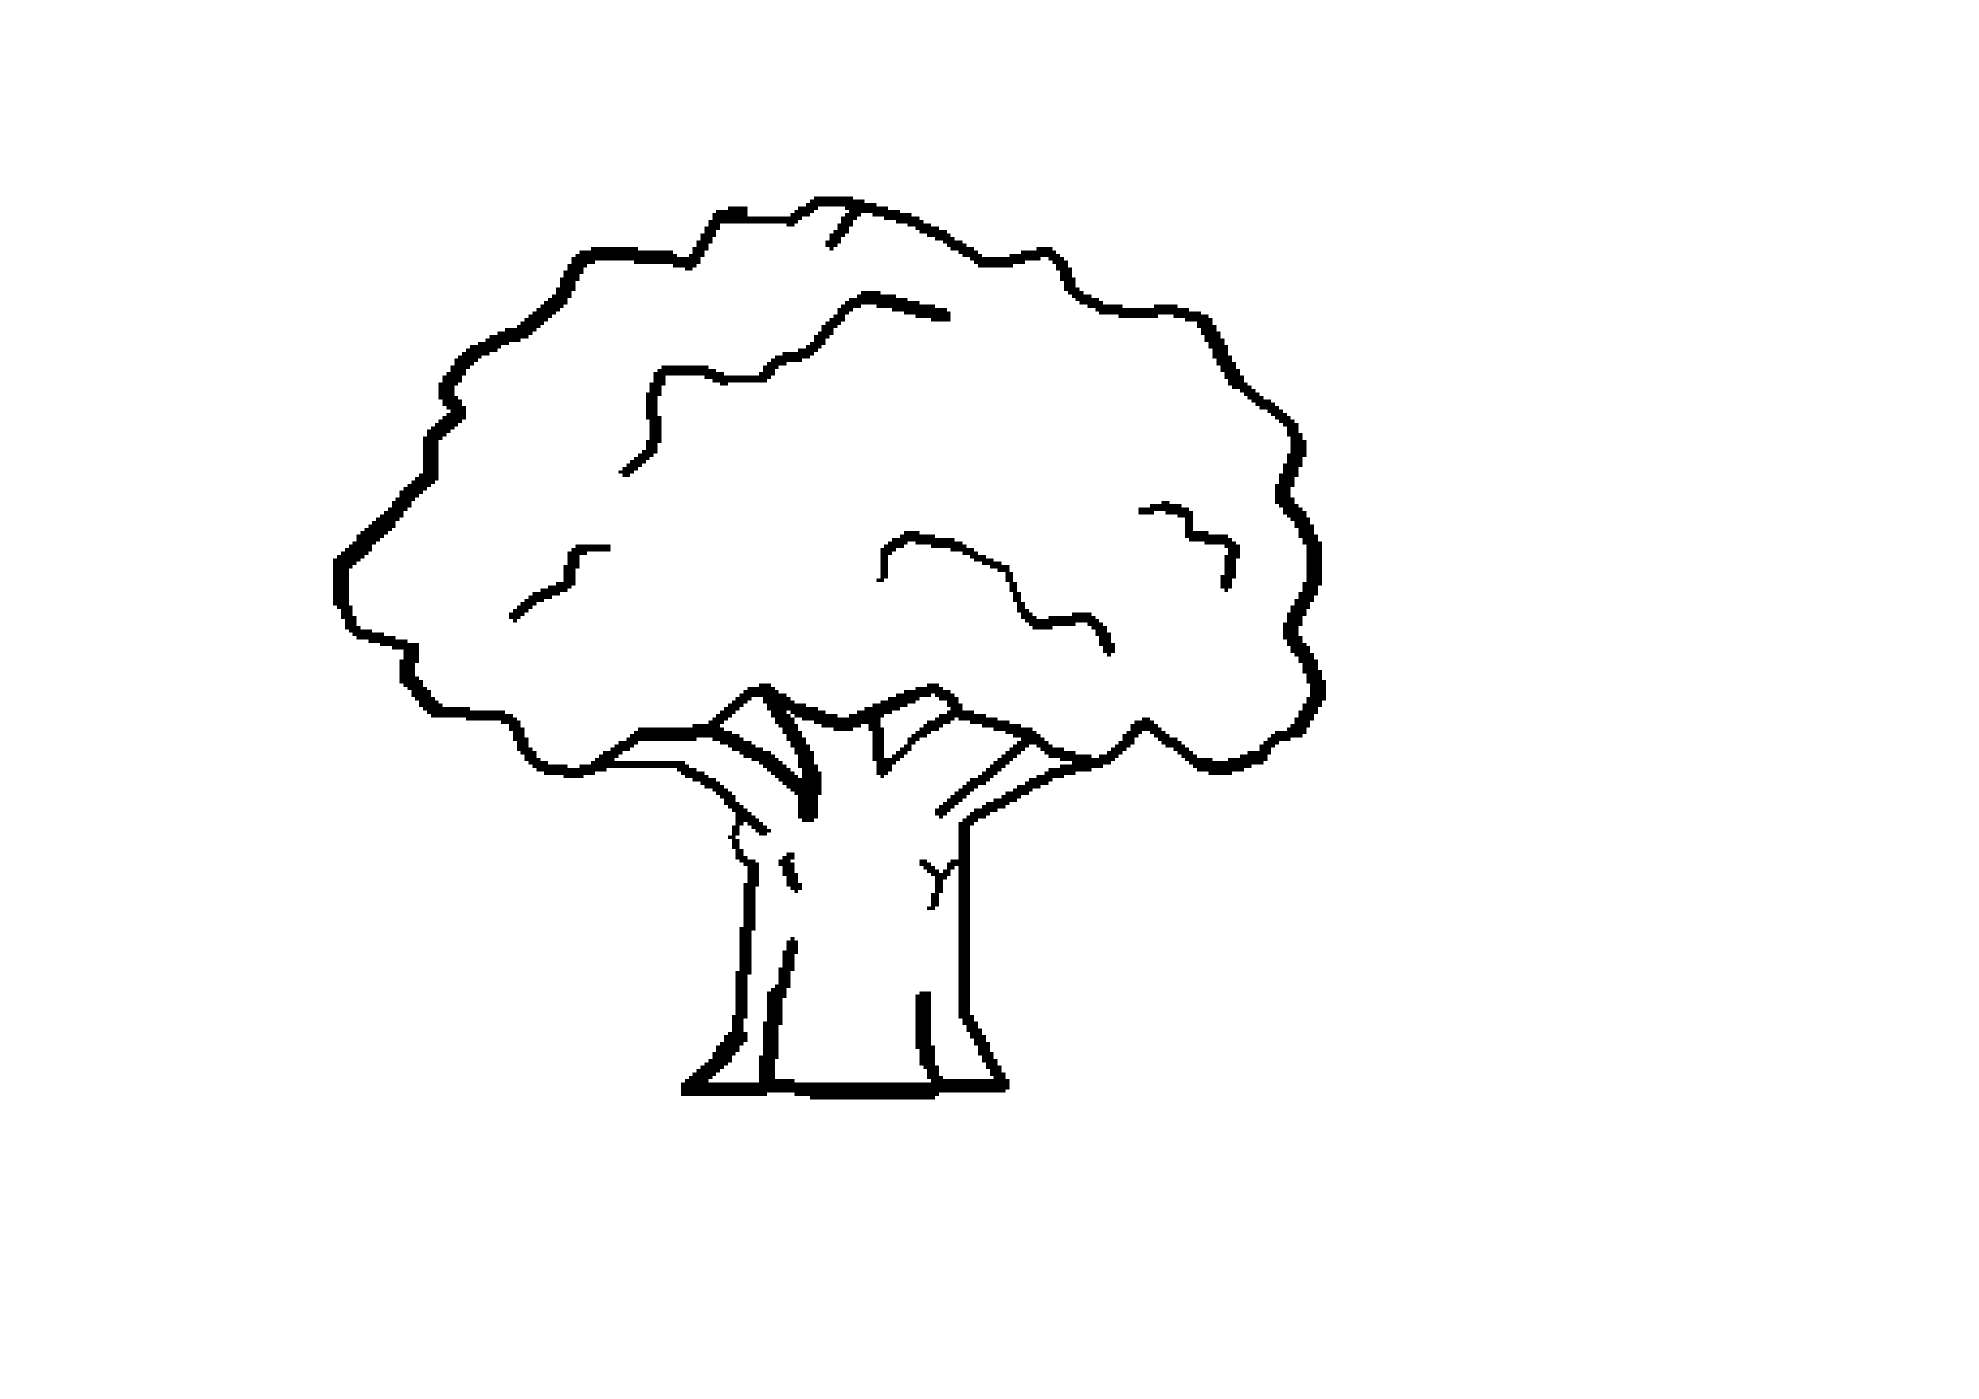 Free Line Art Tree, Download Free Clip Art, Free Clip Art on